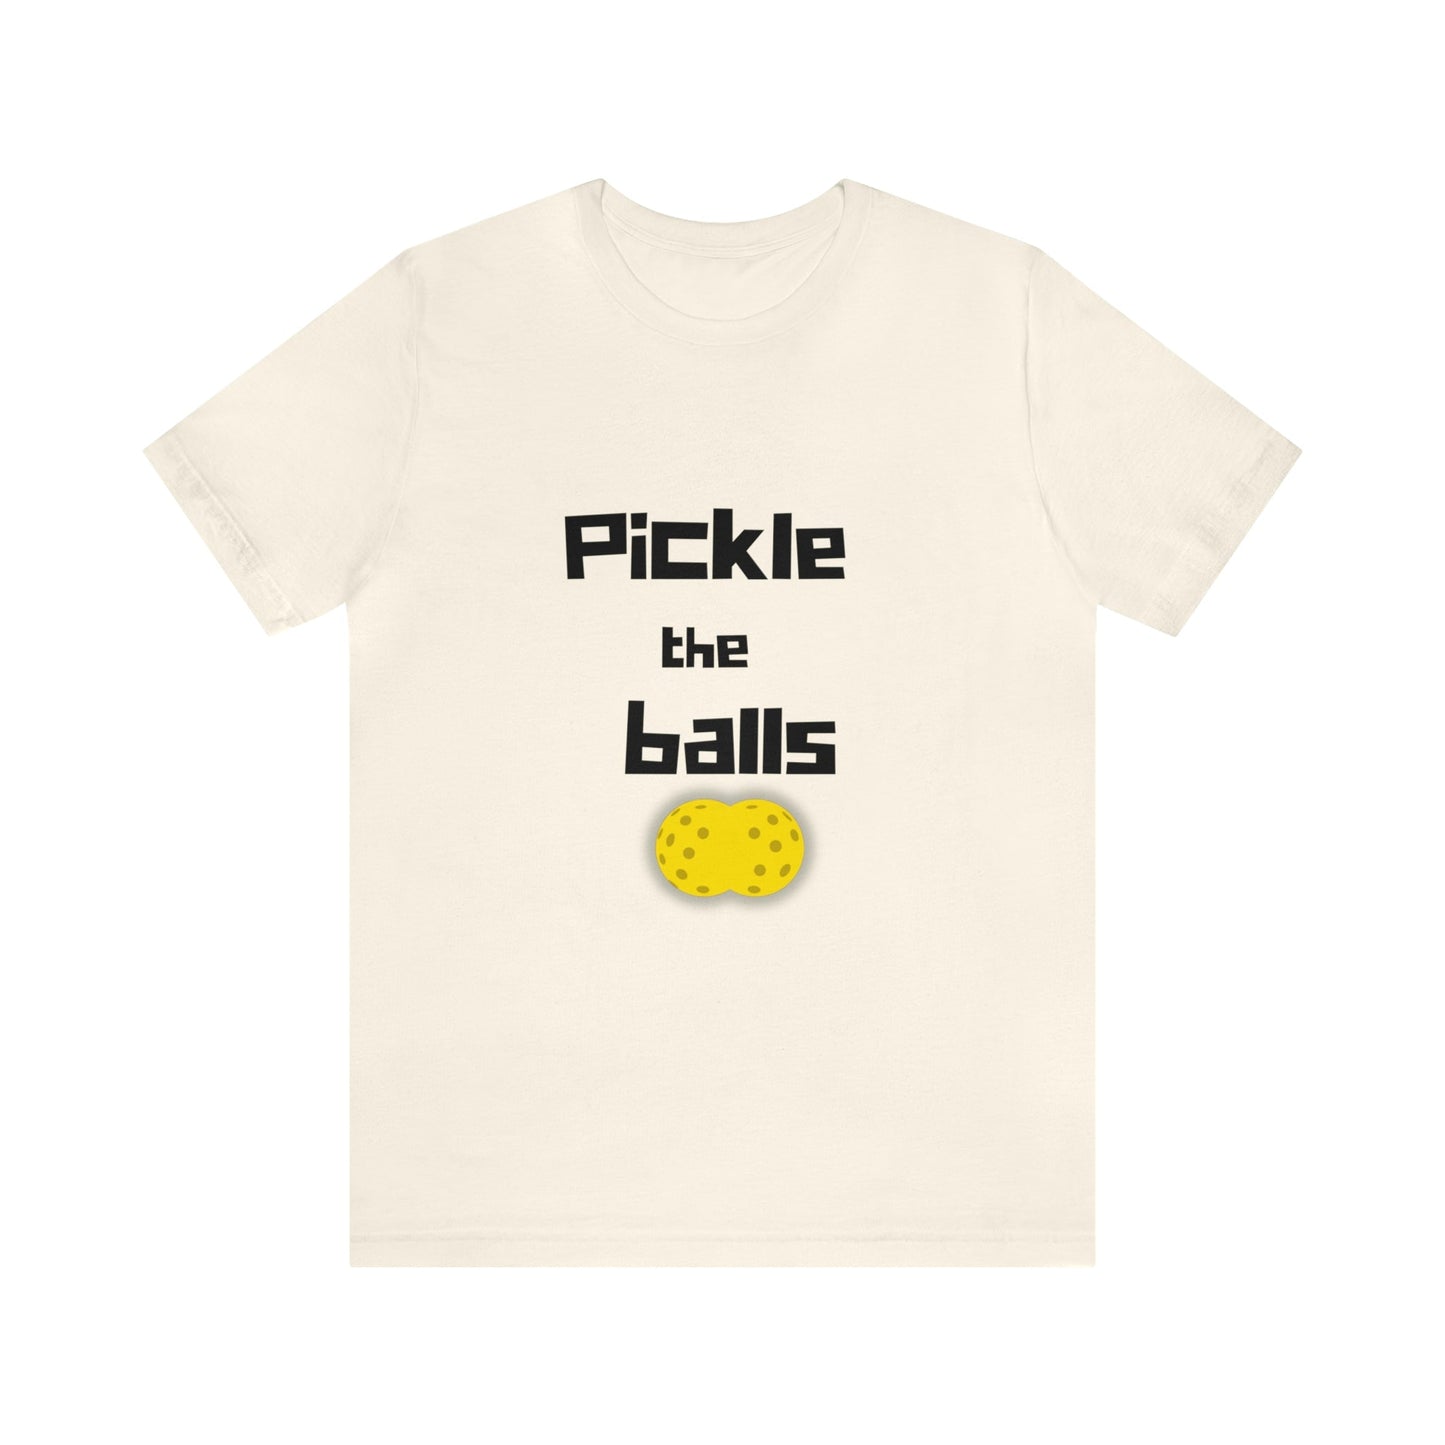 'Pickle the Balls' Pickleball T-Shirt